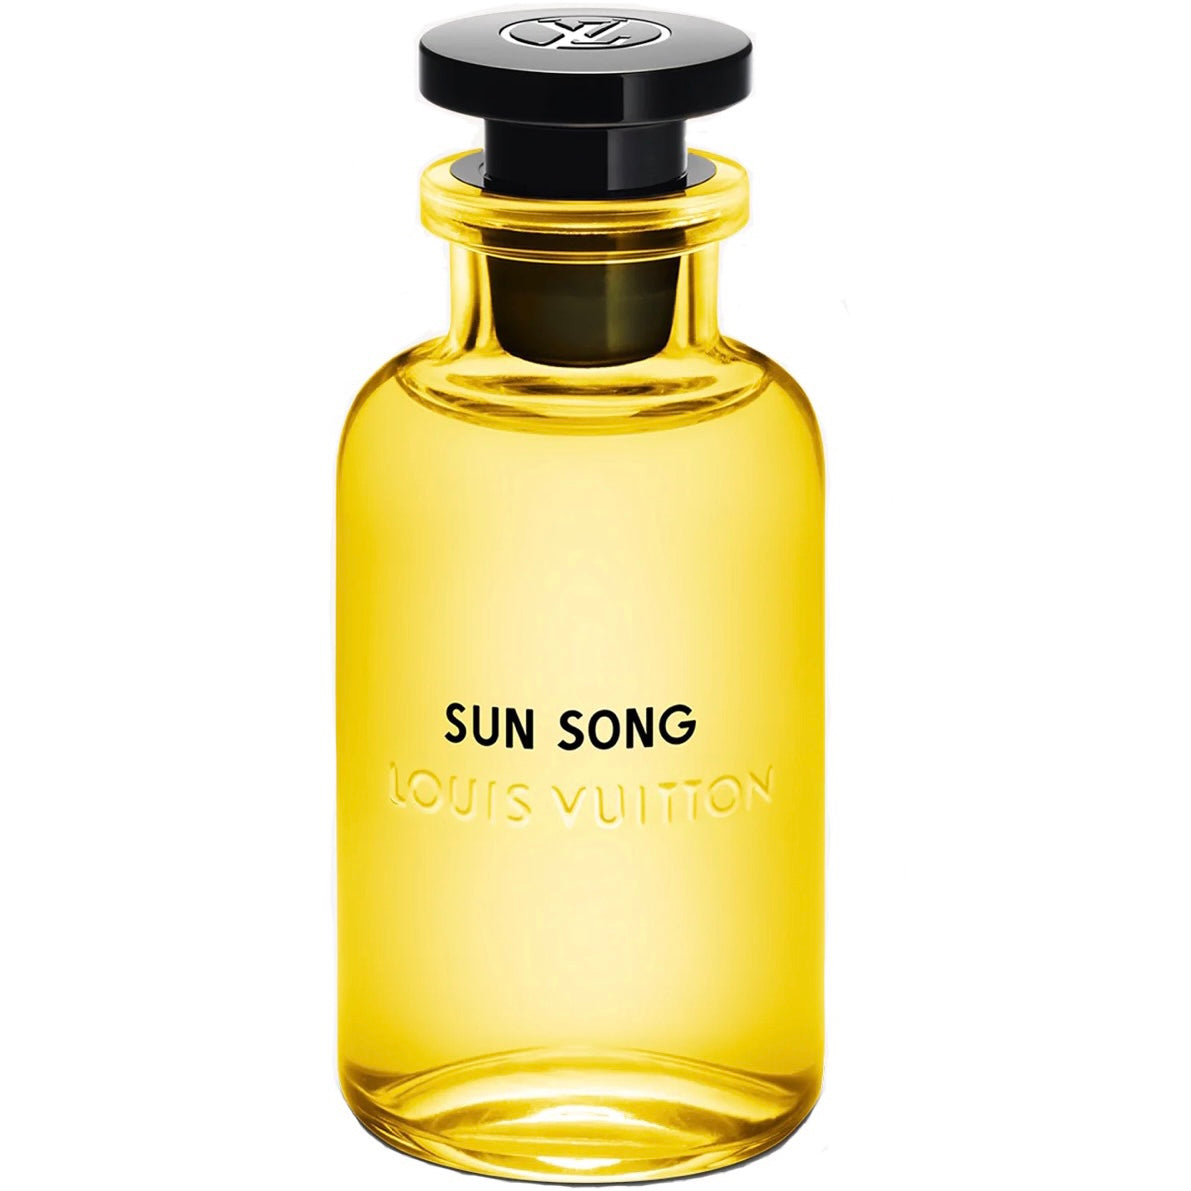 LOUIS VUITTON SUN SONG 10ml - 香水(女性用)